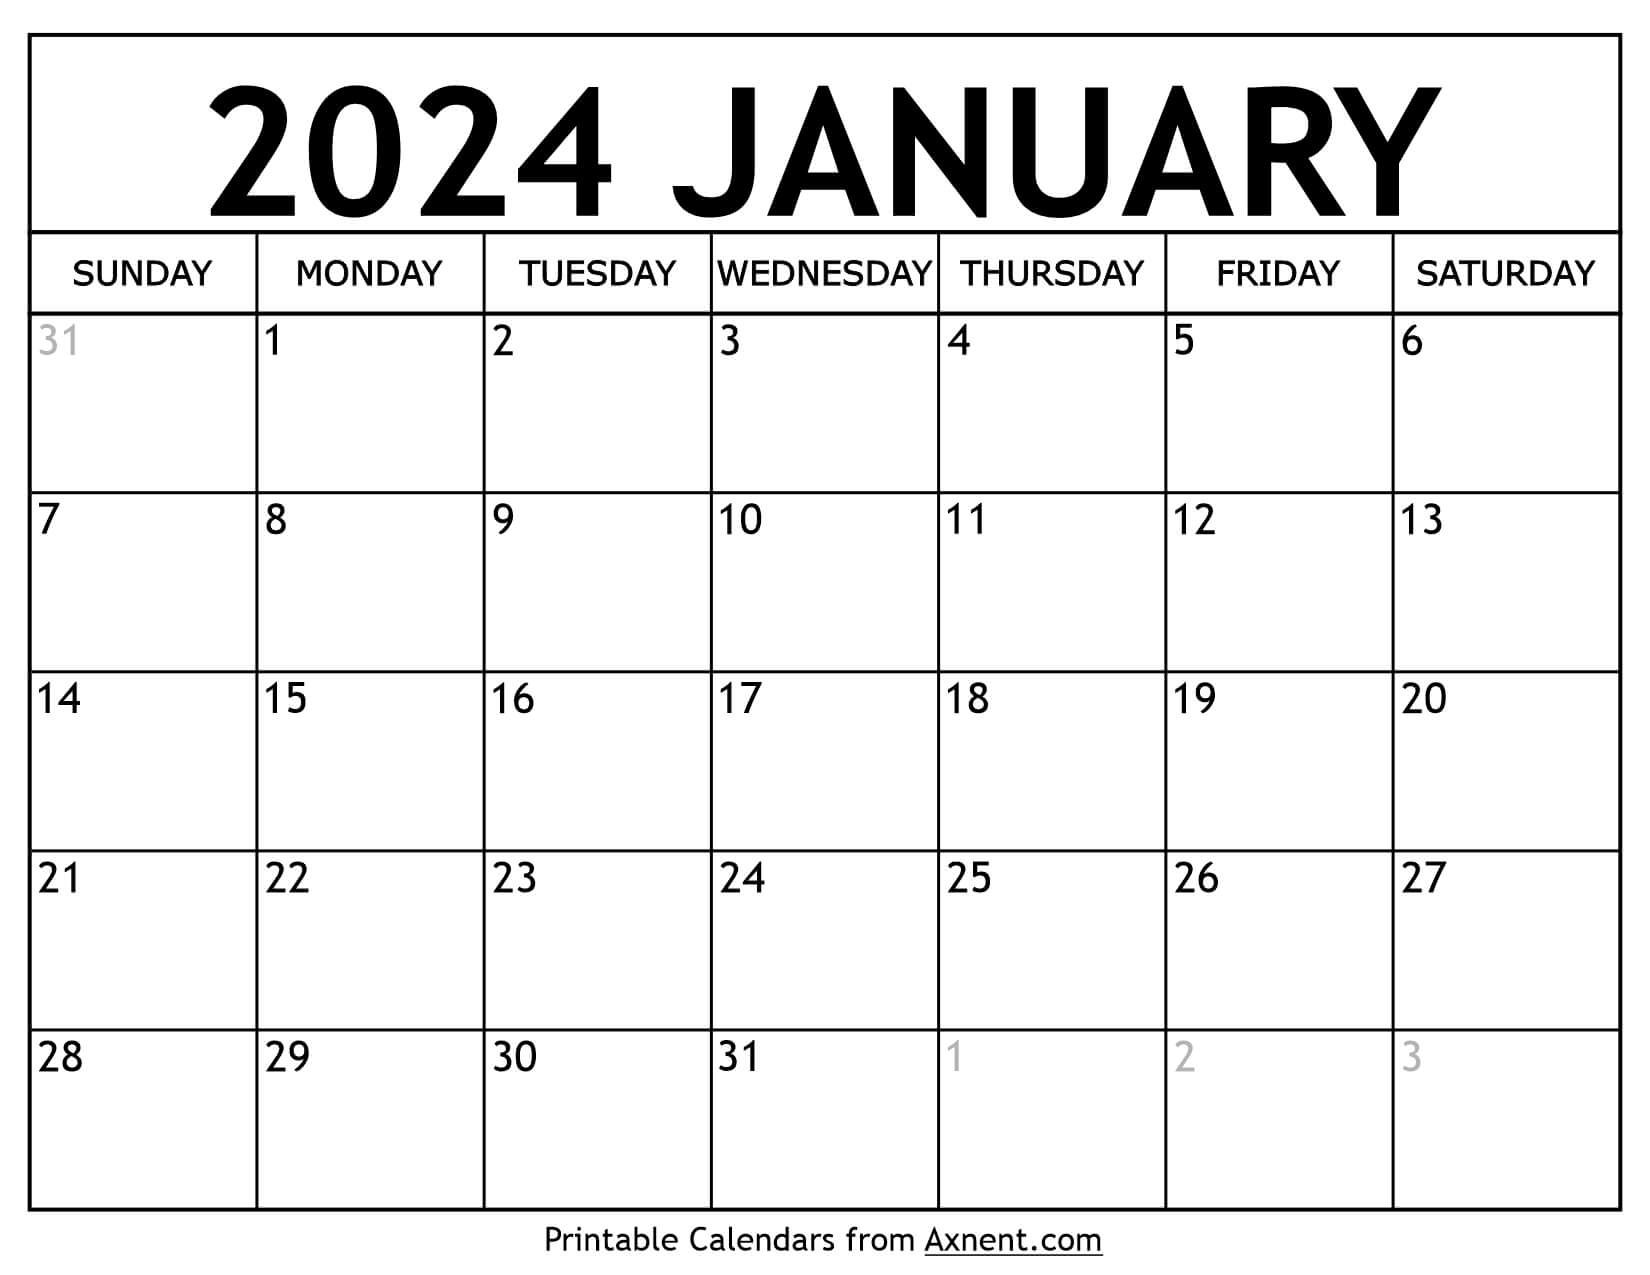 Printable January 2024 Calendar Template - Print Now for Free Calendar January 2024 Printable